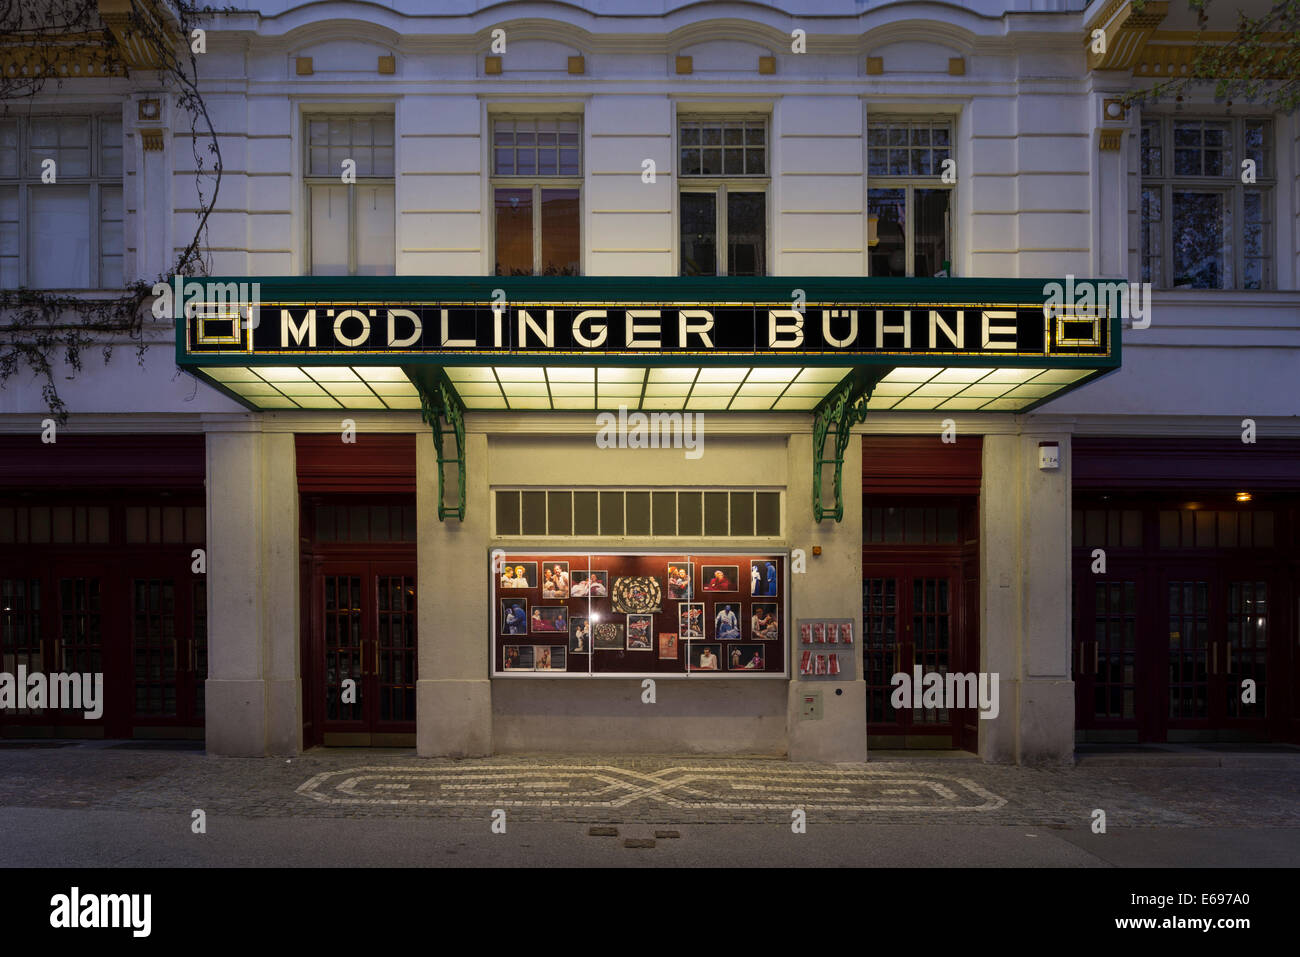 Mödlinger Bühne theater, Mödling, Lower Austria, Austria Stock Photo